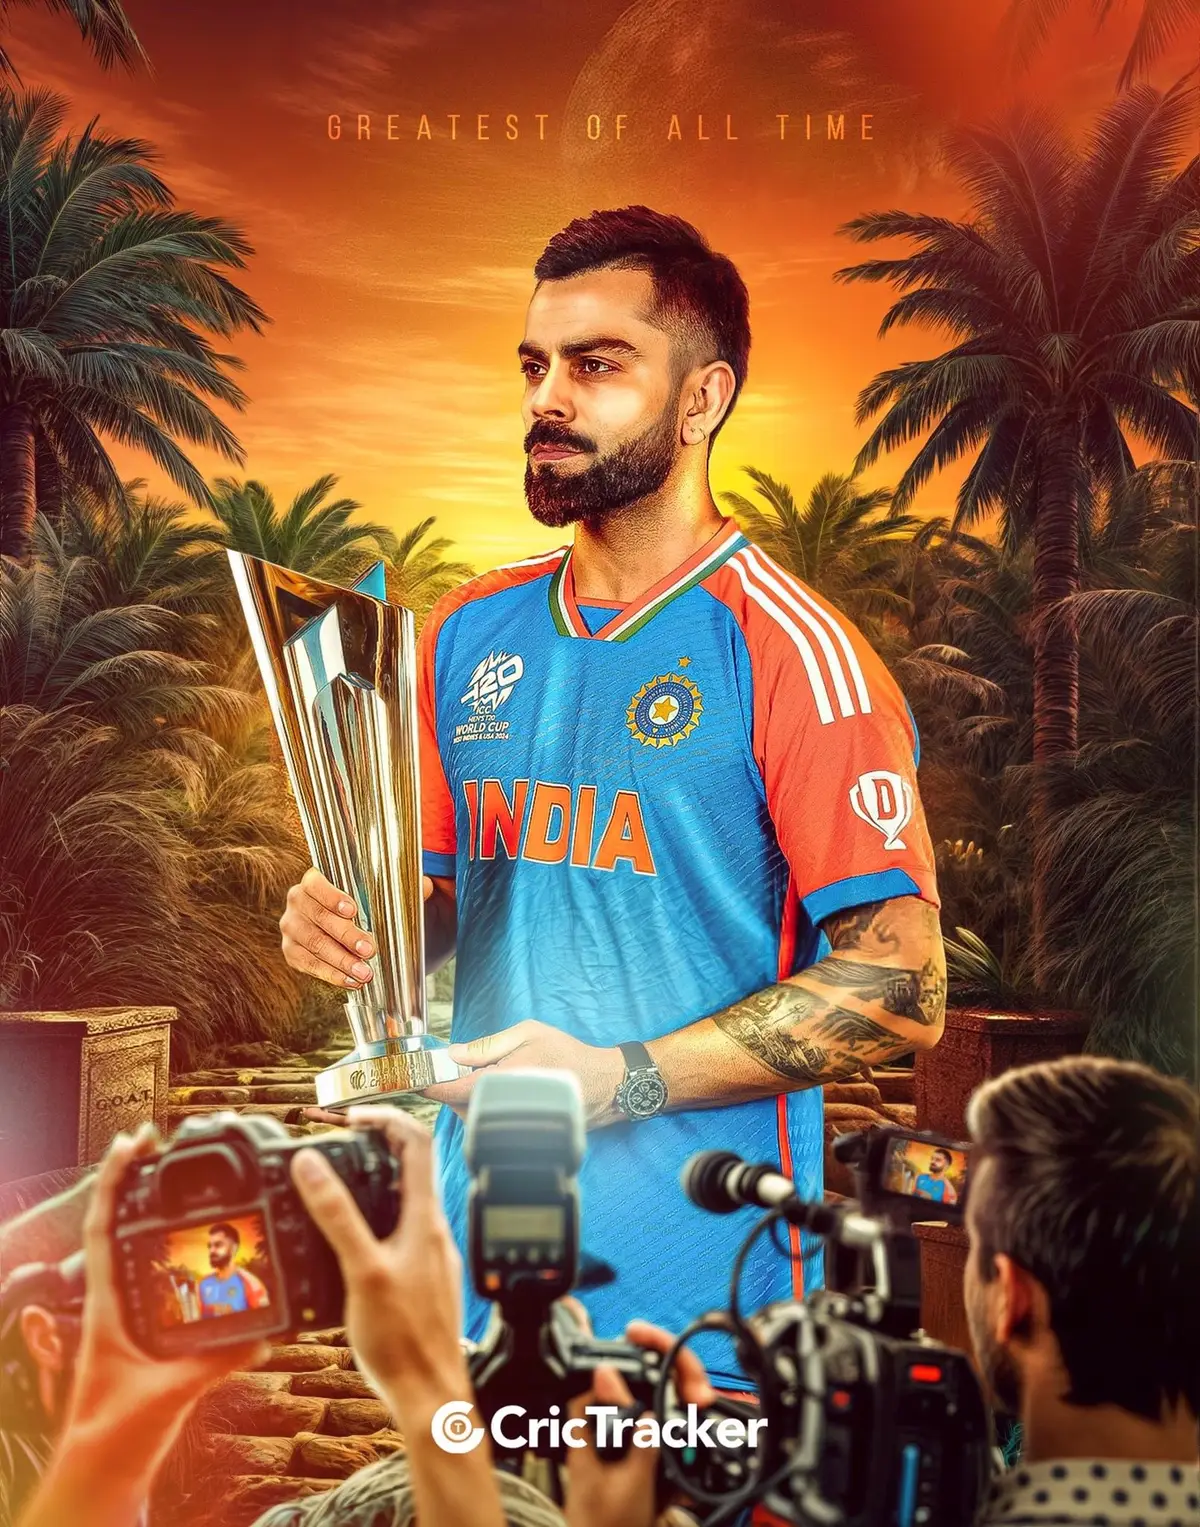 ✅ODI World Cup ✅T20 World Cup ✅Champions Trophy ✅T20 World Cup Player of the Tournament x 2 ✅ODI World Cup Player of the Tournament  ✅ICC Cricketer of the Year ✅ICC ODI Cricketer of the year Virat Kohli 𝐜𝐨𝐦𝐩𝐥𝐞𝐭𝐞𝐬 𝐰𝐡𝐢𝐭𝐞-𝐛𝐚𝐥𝐥 𝐜𝐫𝐢𝐜𝐤𝐞𝐭.#t20cricket #viratkohli #t20worldcup #teamindia 